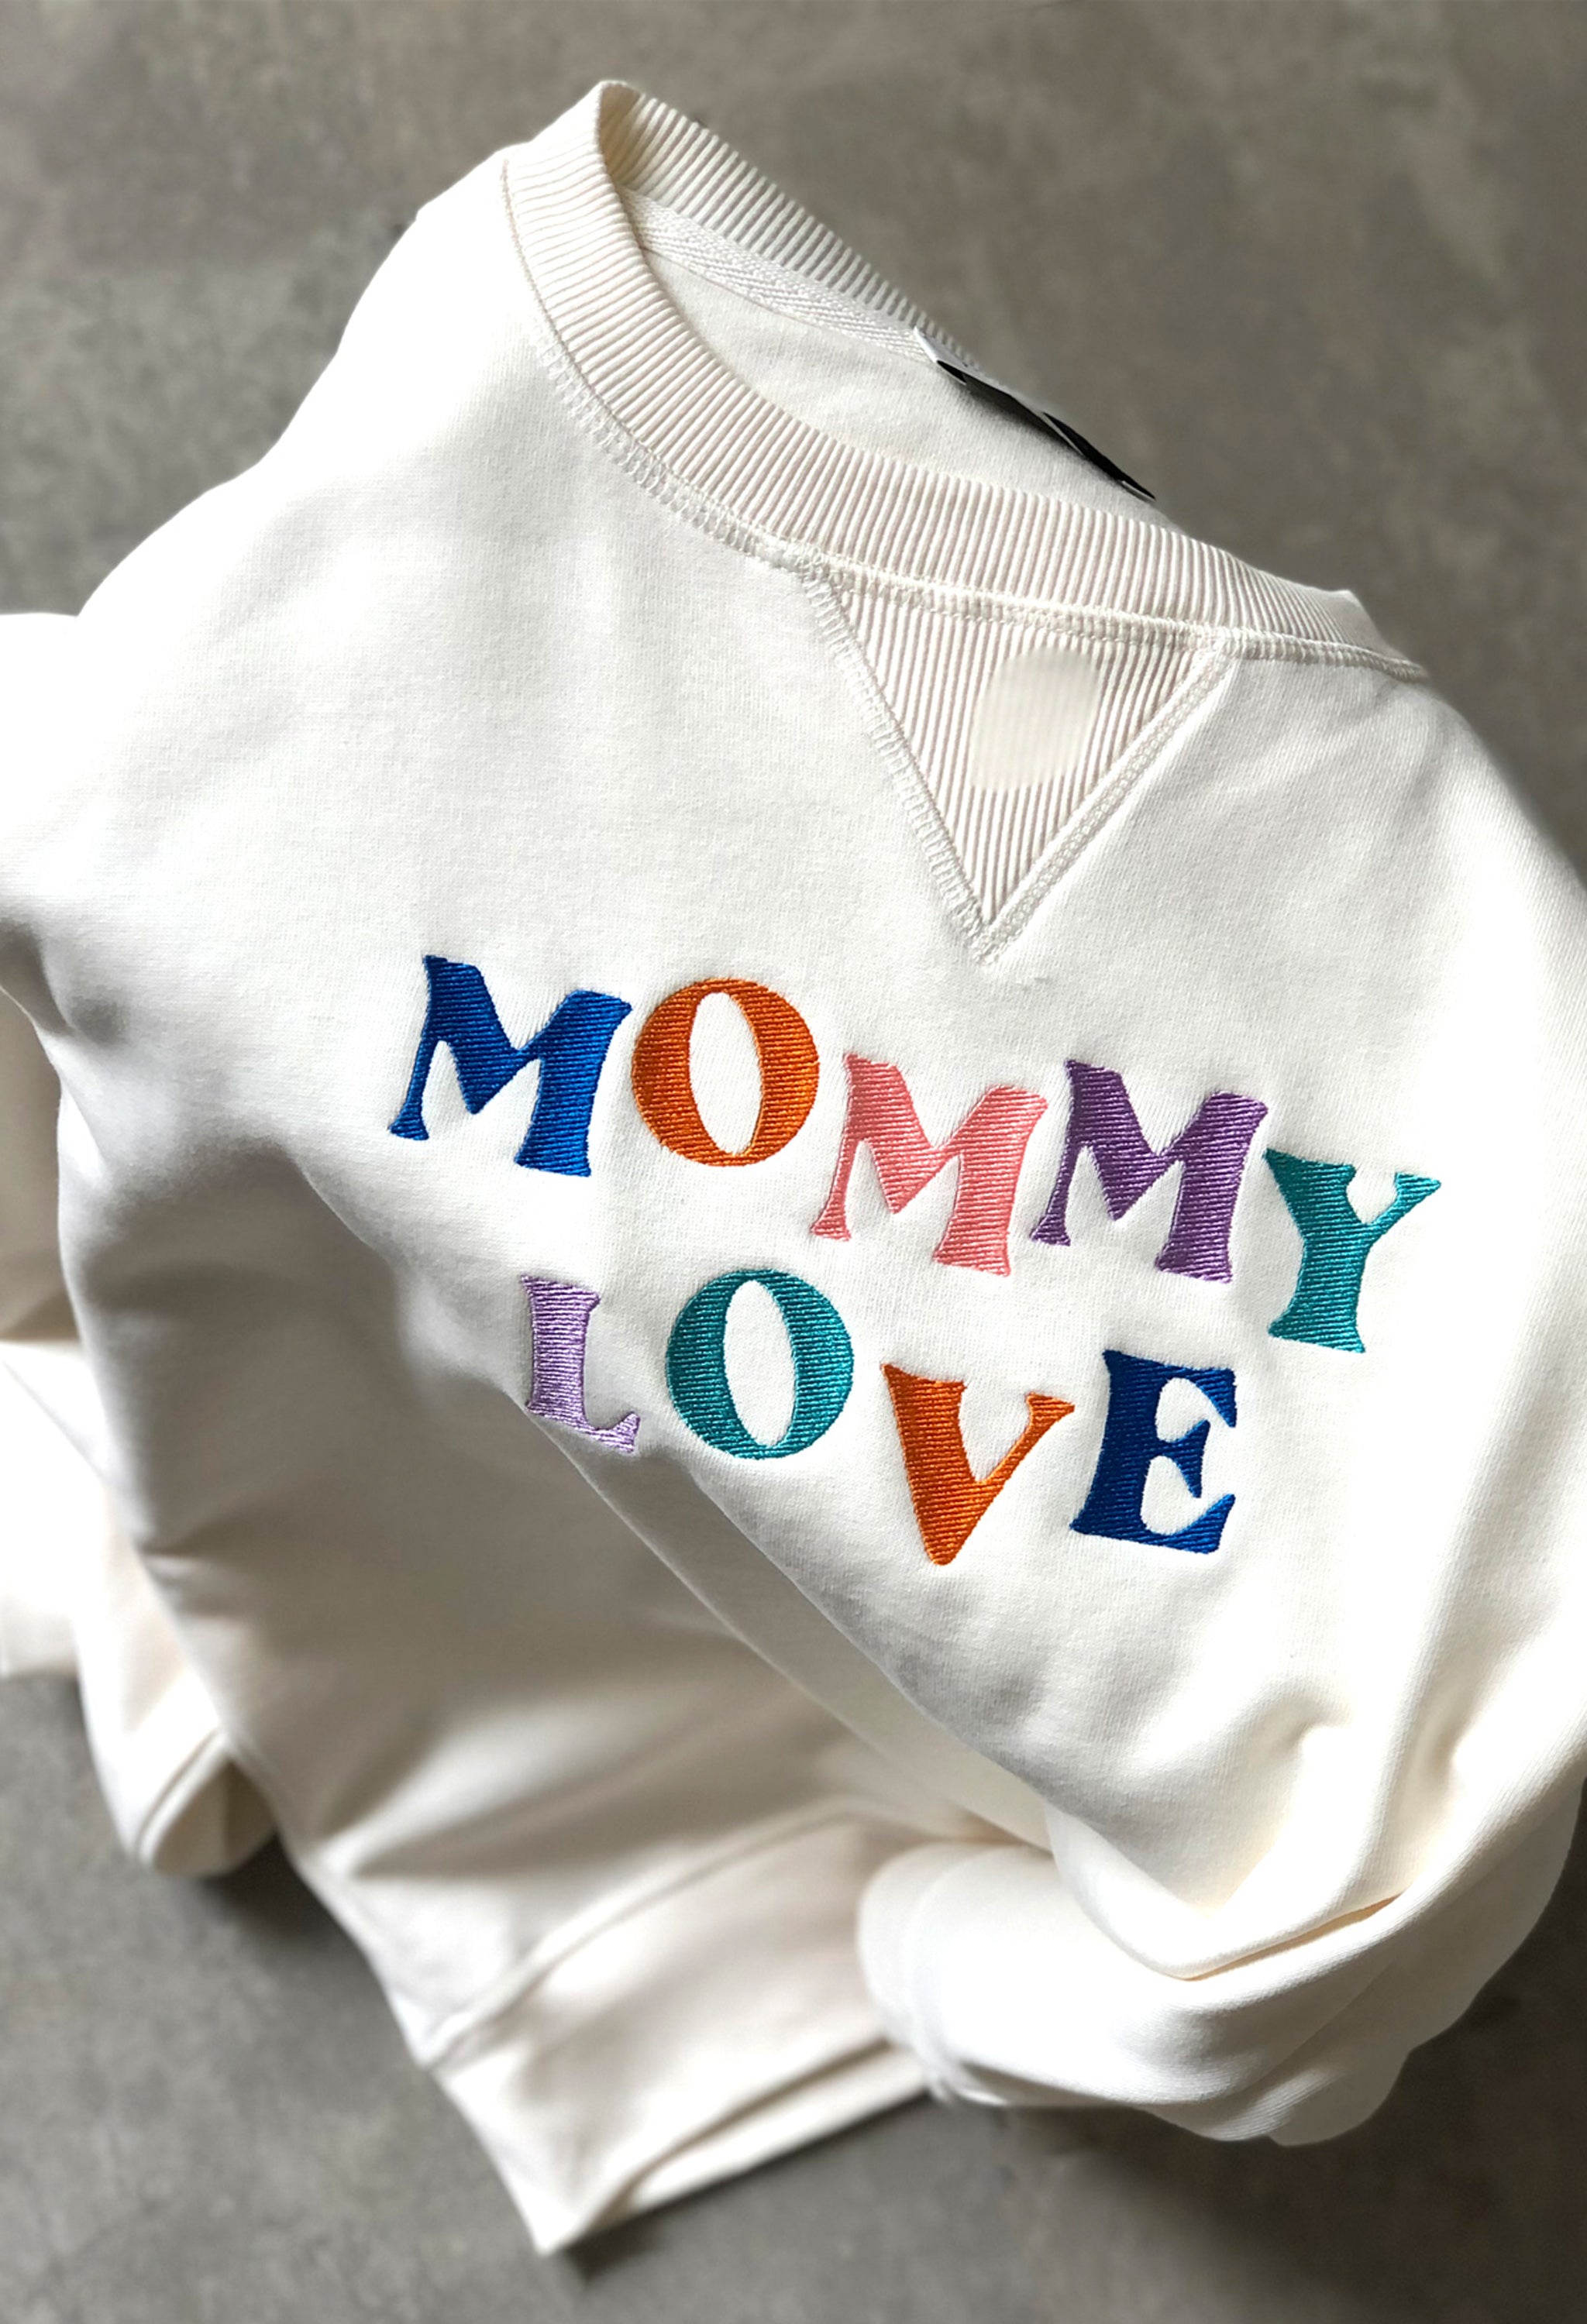 Mommy Love Sweatshirt